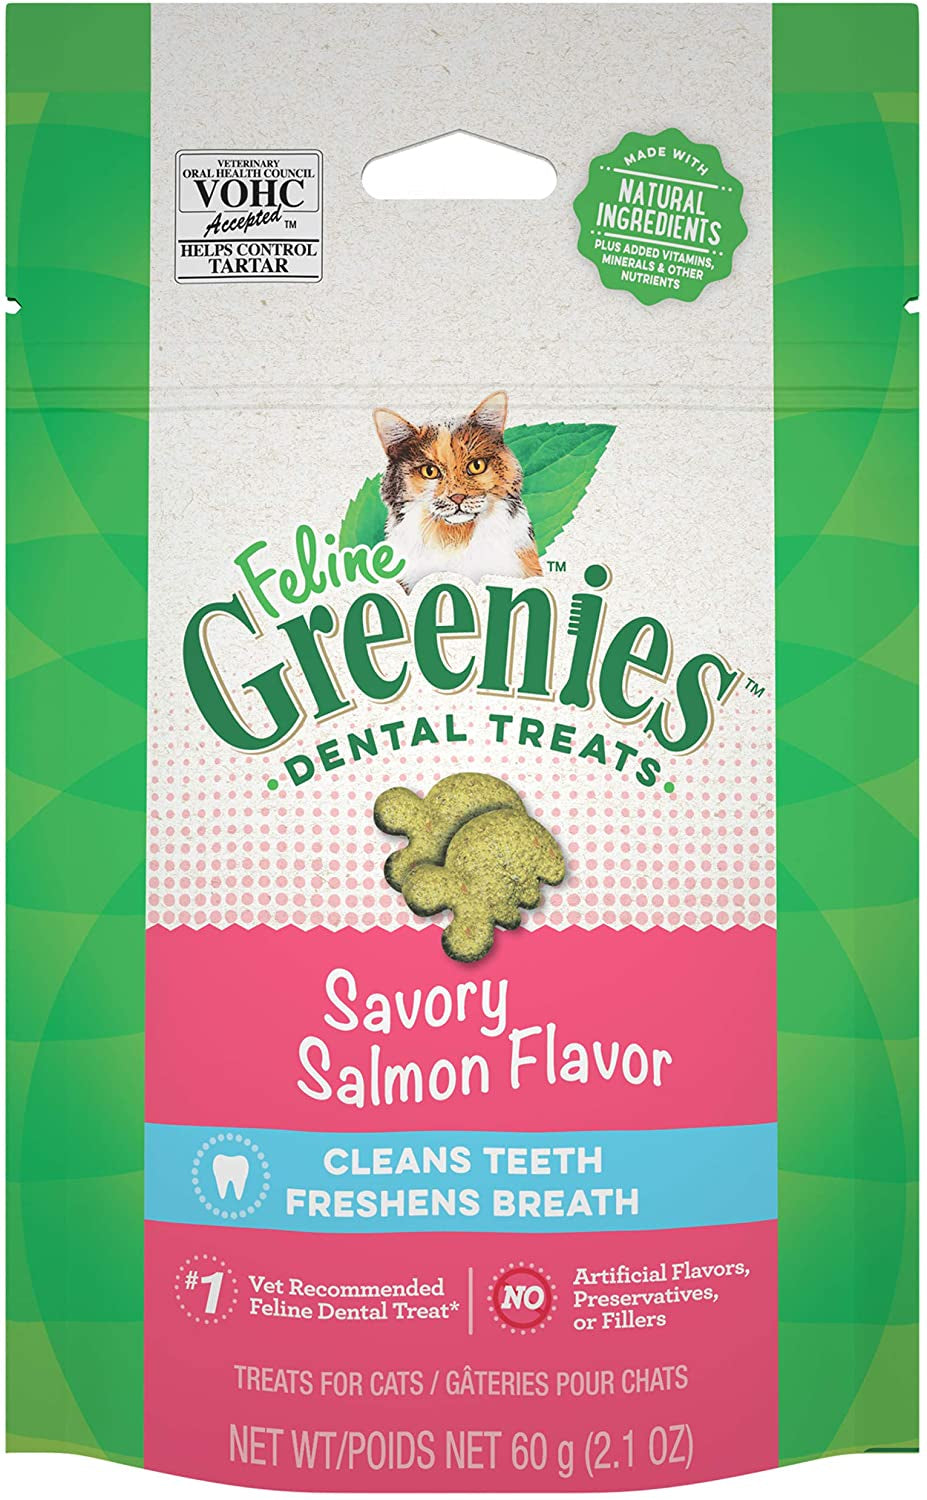 7.5 oz (3 x 2.5 oz) Greenies Feline Natural Dental Treats Tempting Salmon Flavor